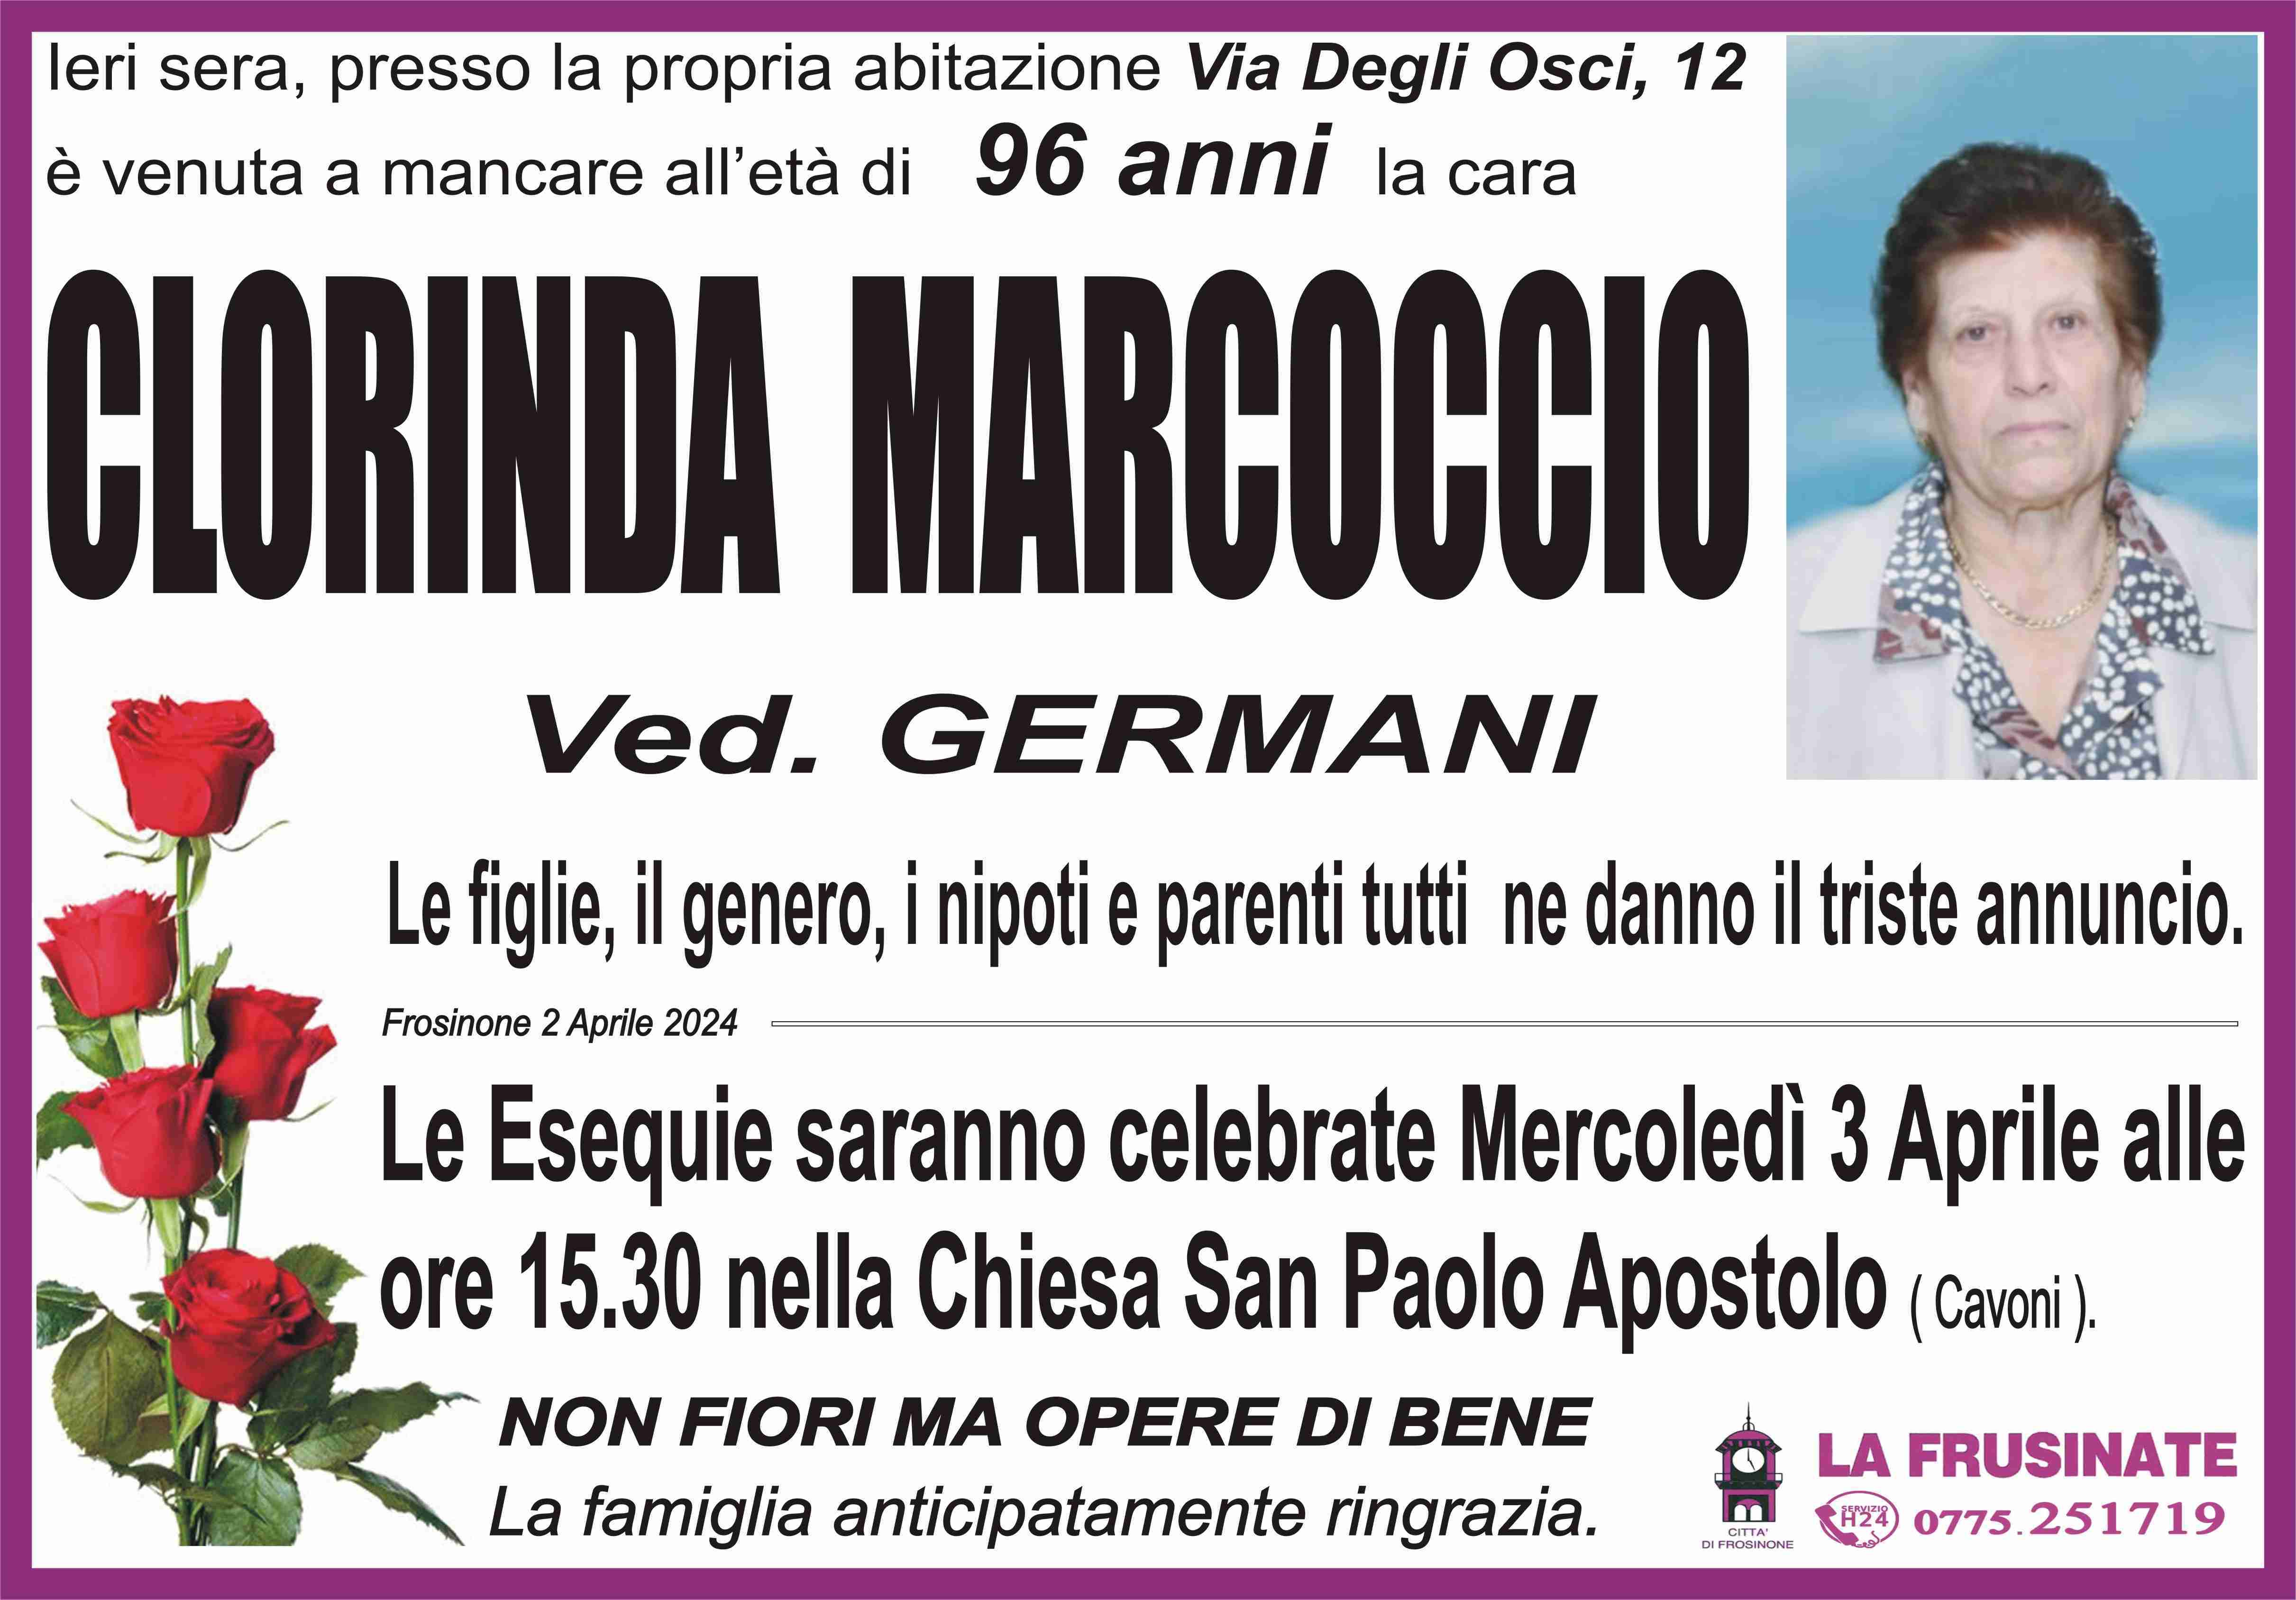 Clorinda Marcoccio